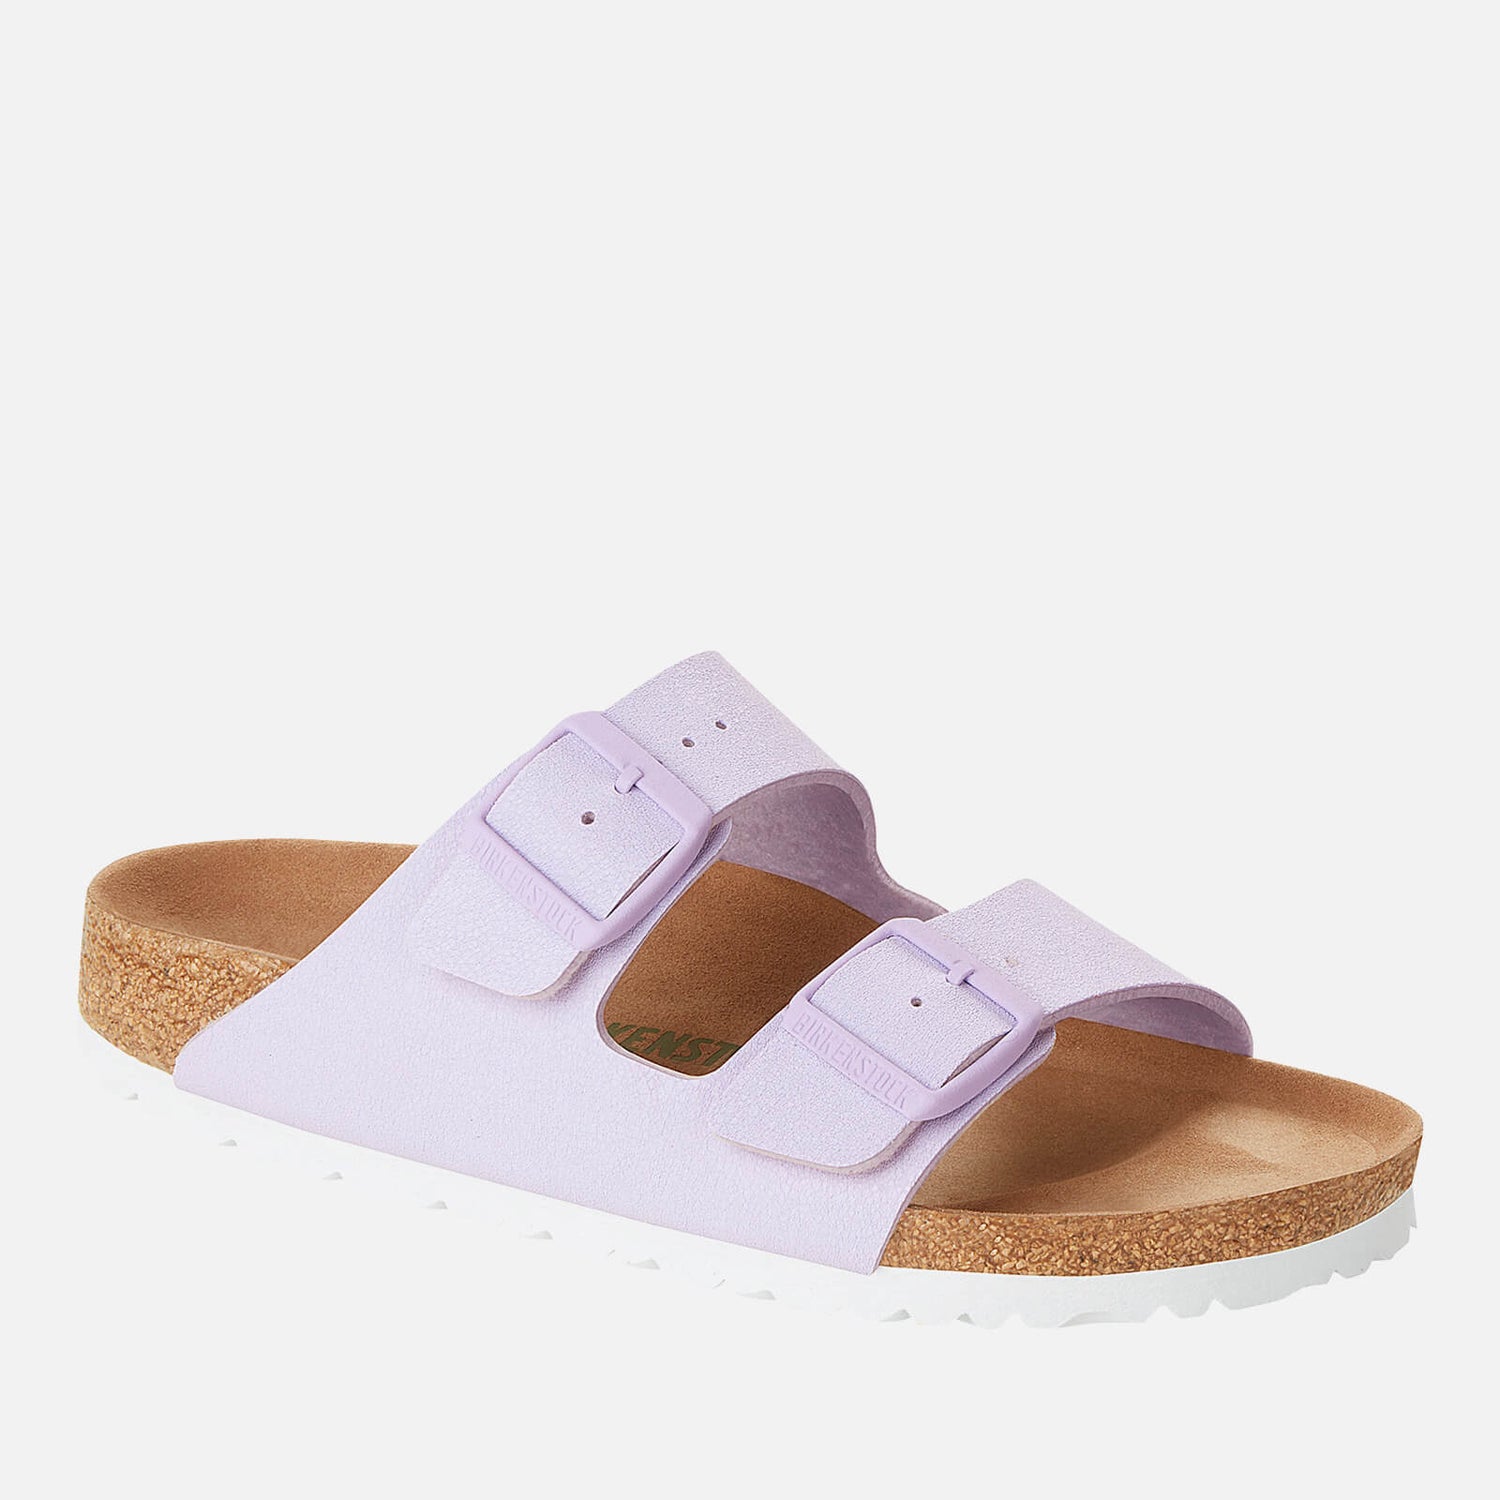 Birkenstock Women's Arizona Slim Fit Vegan Double Strap Sandals - Lavender Fog